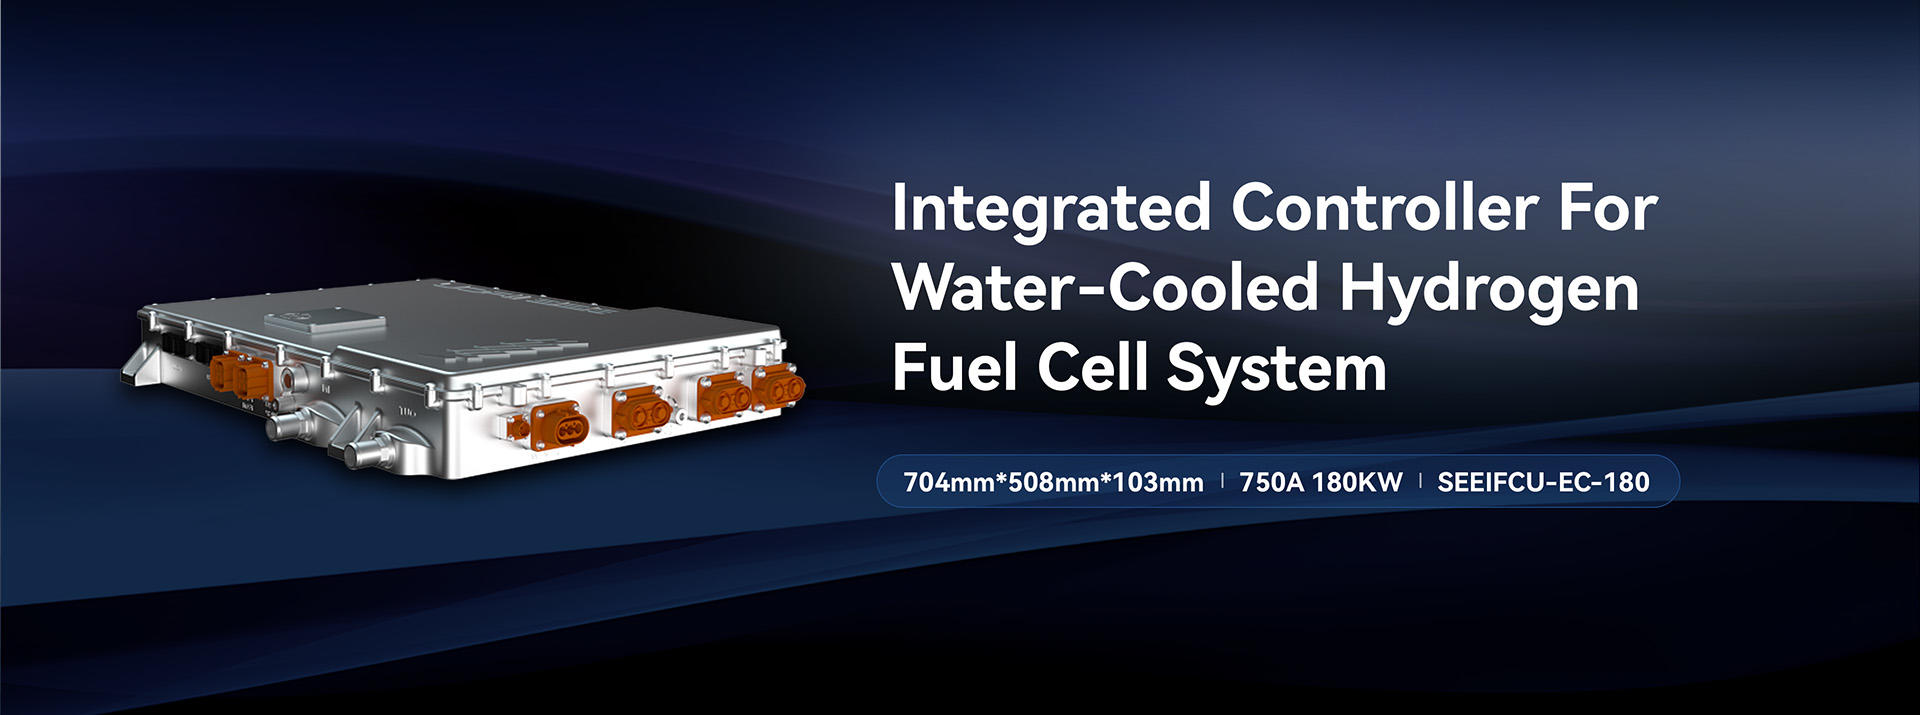 Pinagsamang Controller Para sa Water-Cooled Hydrogen Fuel Cell System